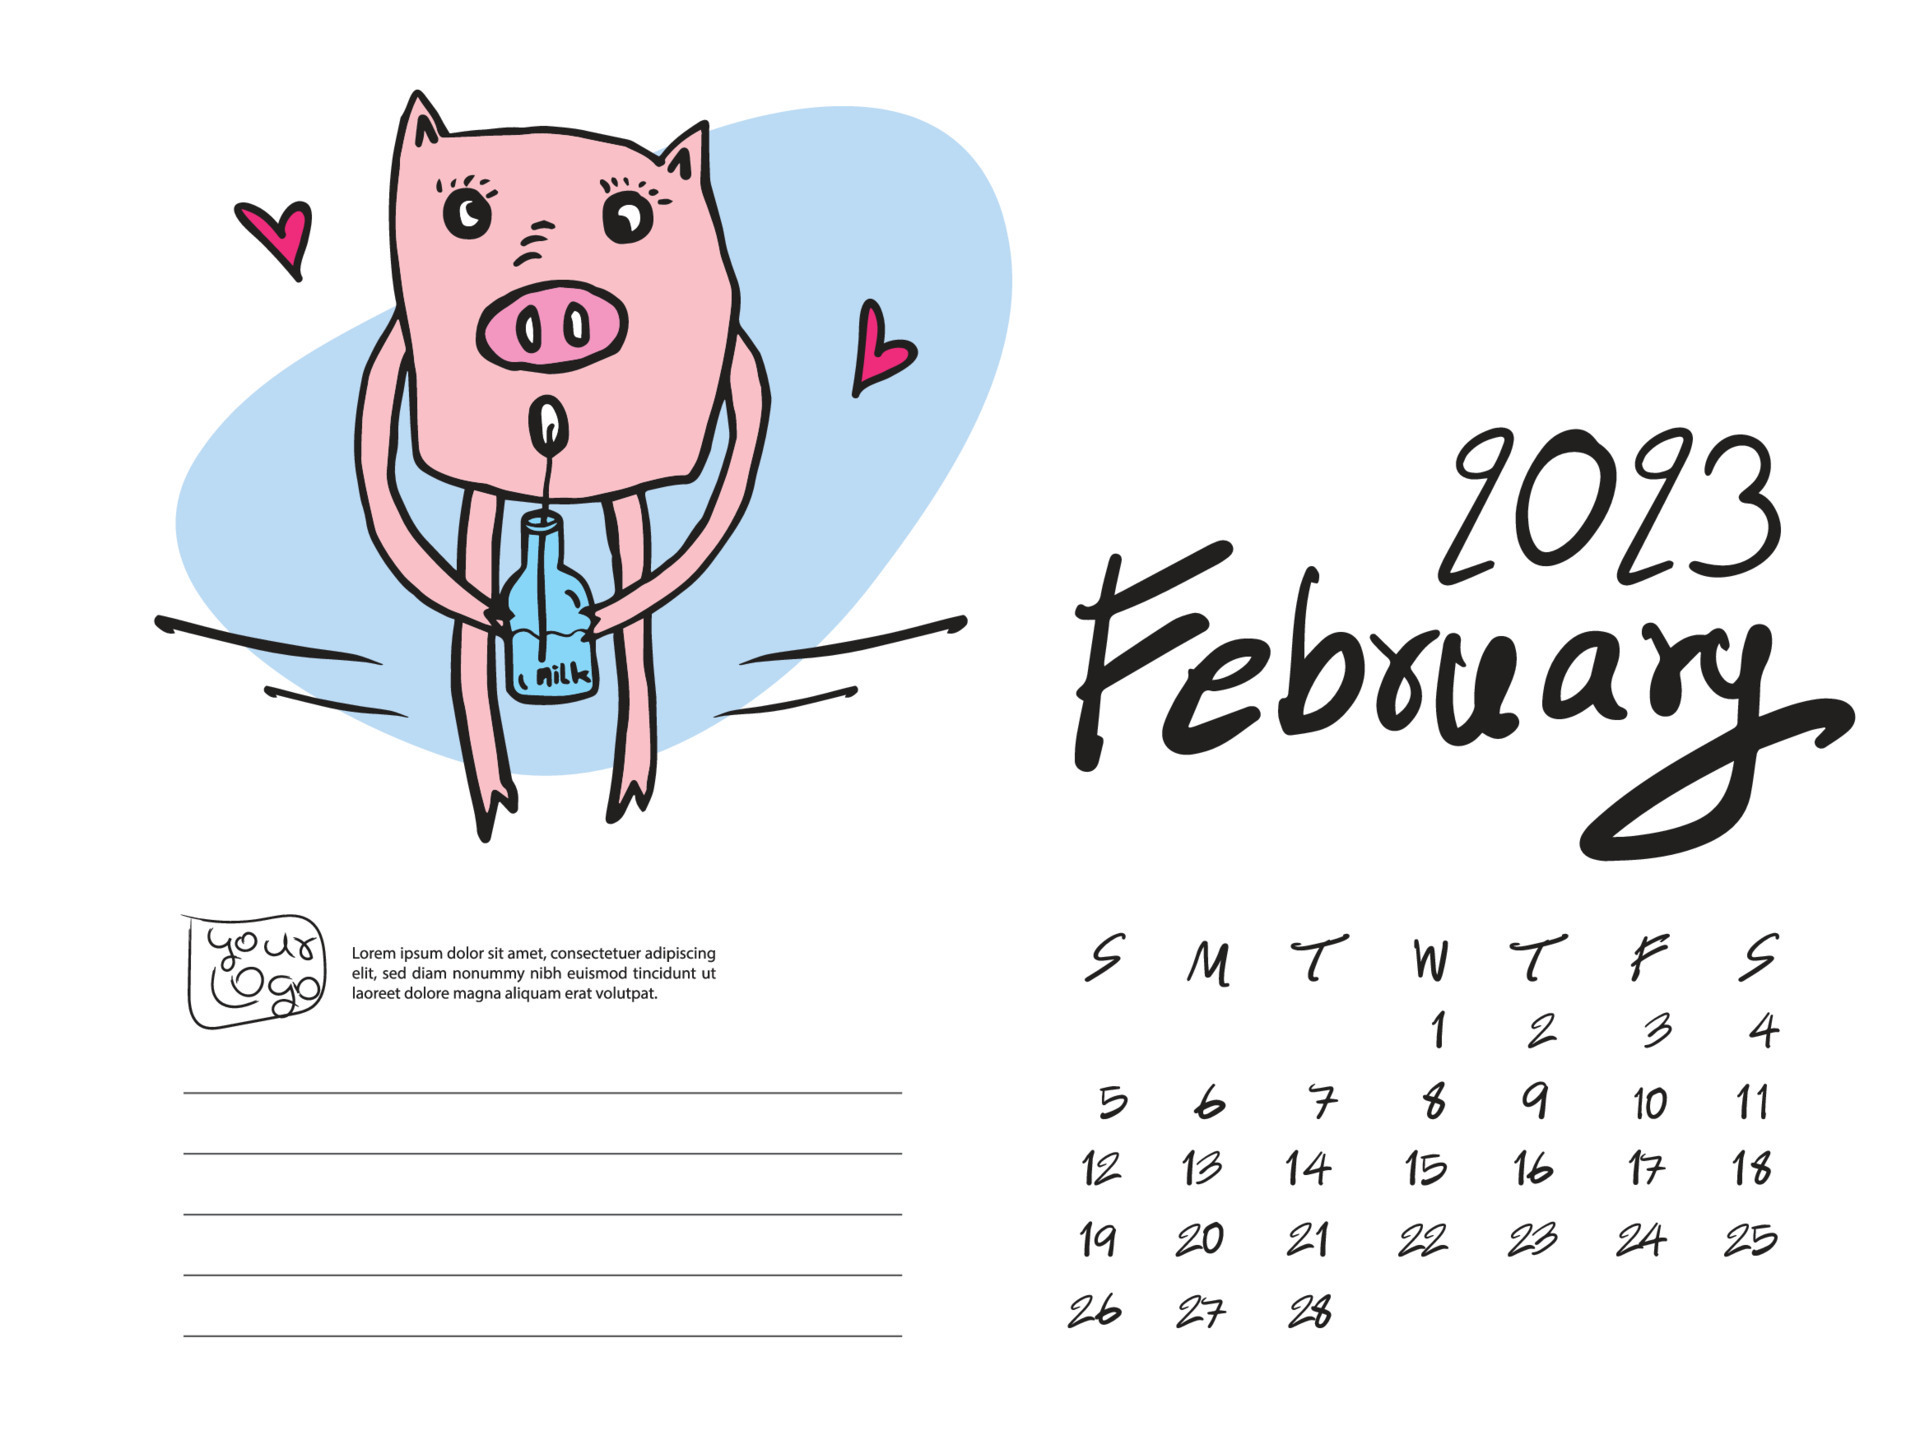 Calendar 2023 design with Cute Pig vector illustration, February 2023 artwork, Lettering, Desk calendar 2023 layout, planner, wall calendar , pig cartoon character, holiday event